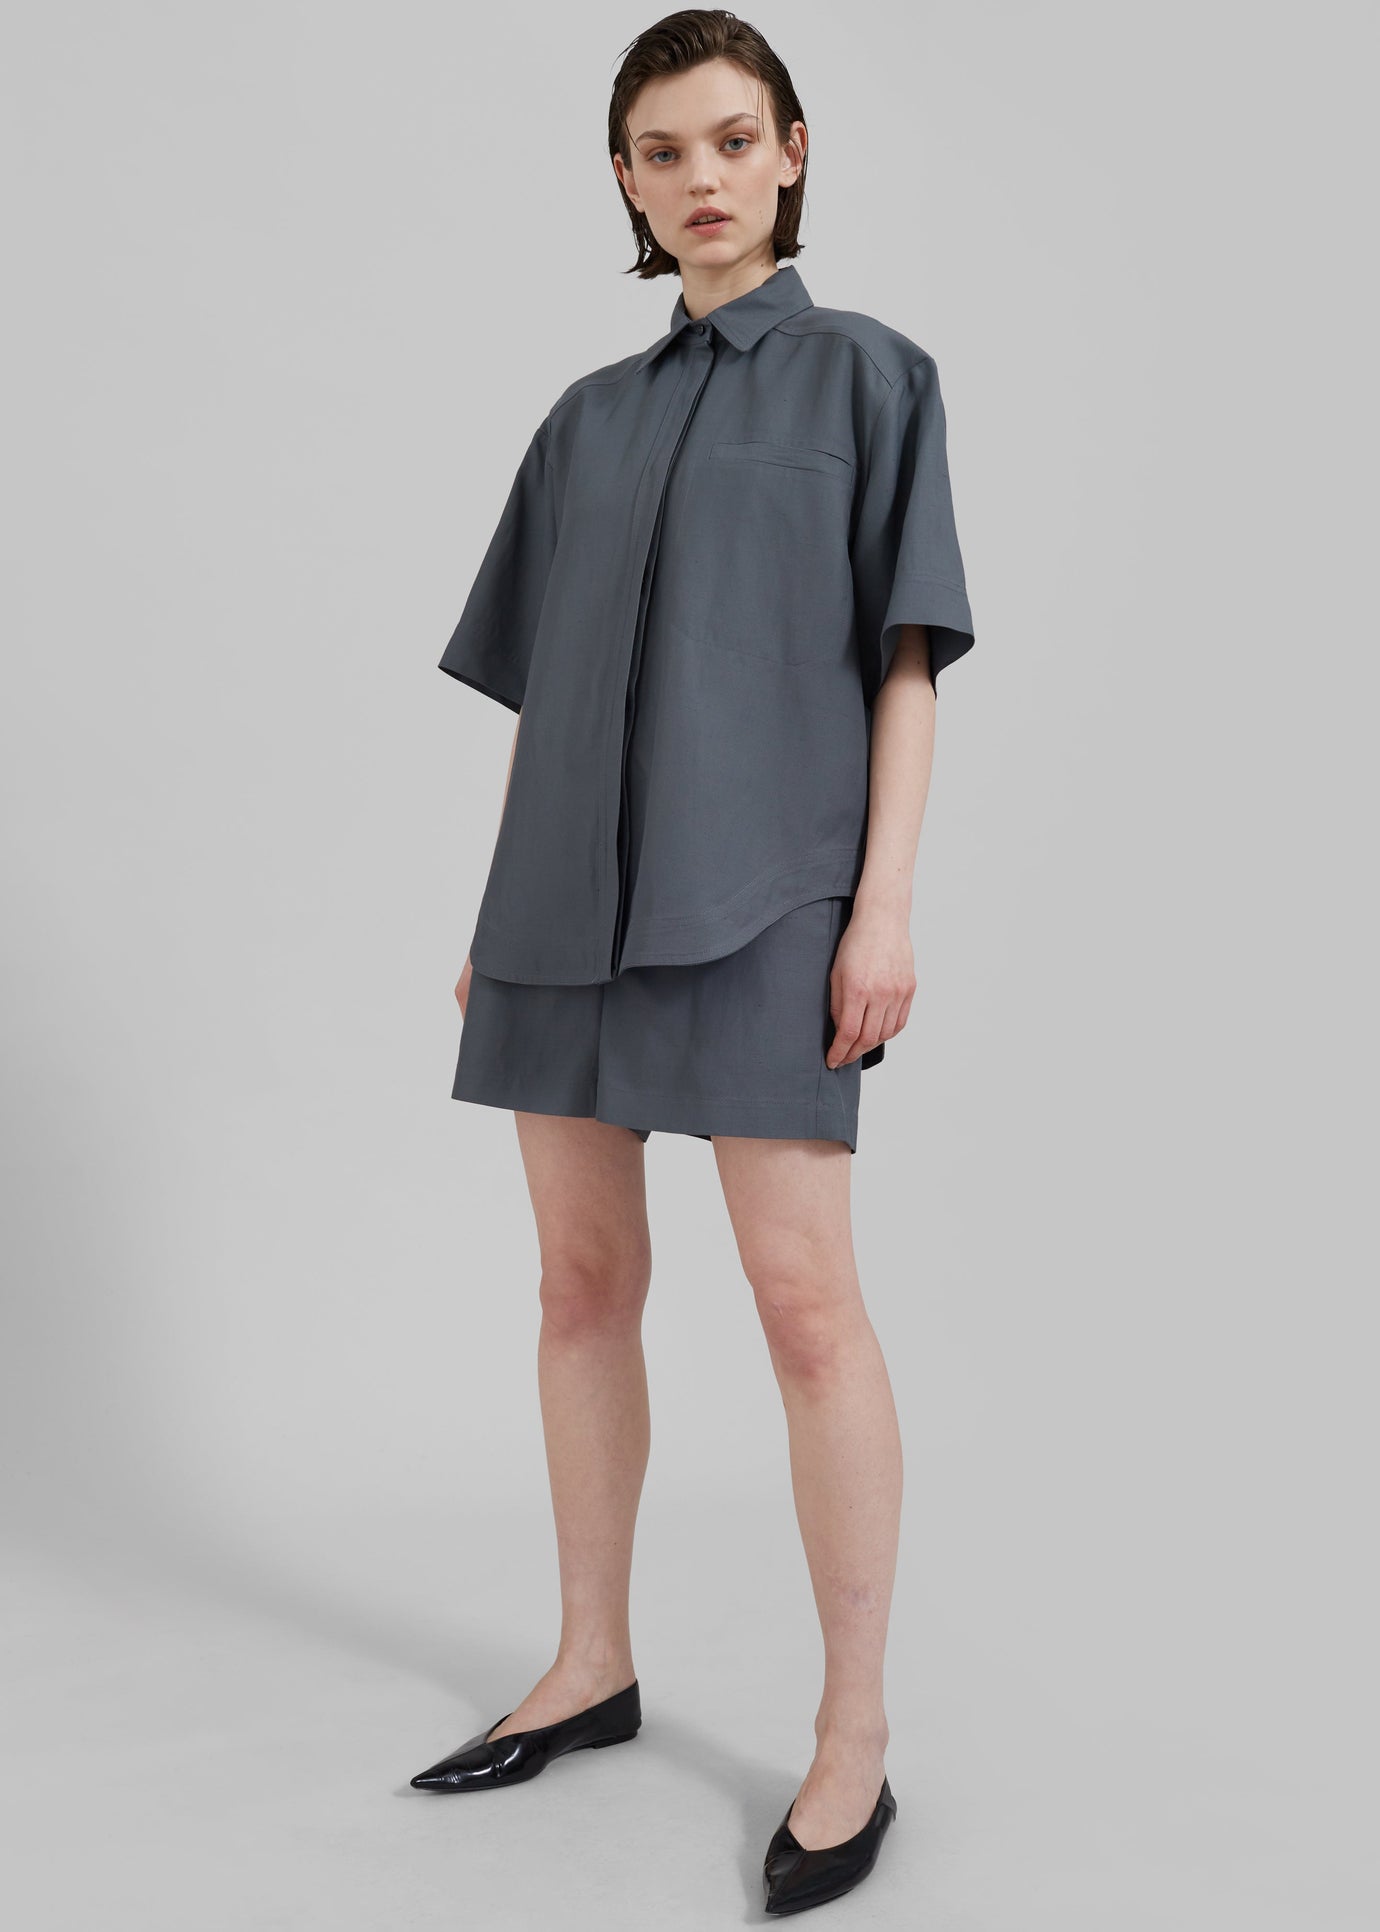 Loulou Studio Moheli Short Sleeve Shirt - Fjord Grey - 1